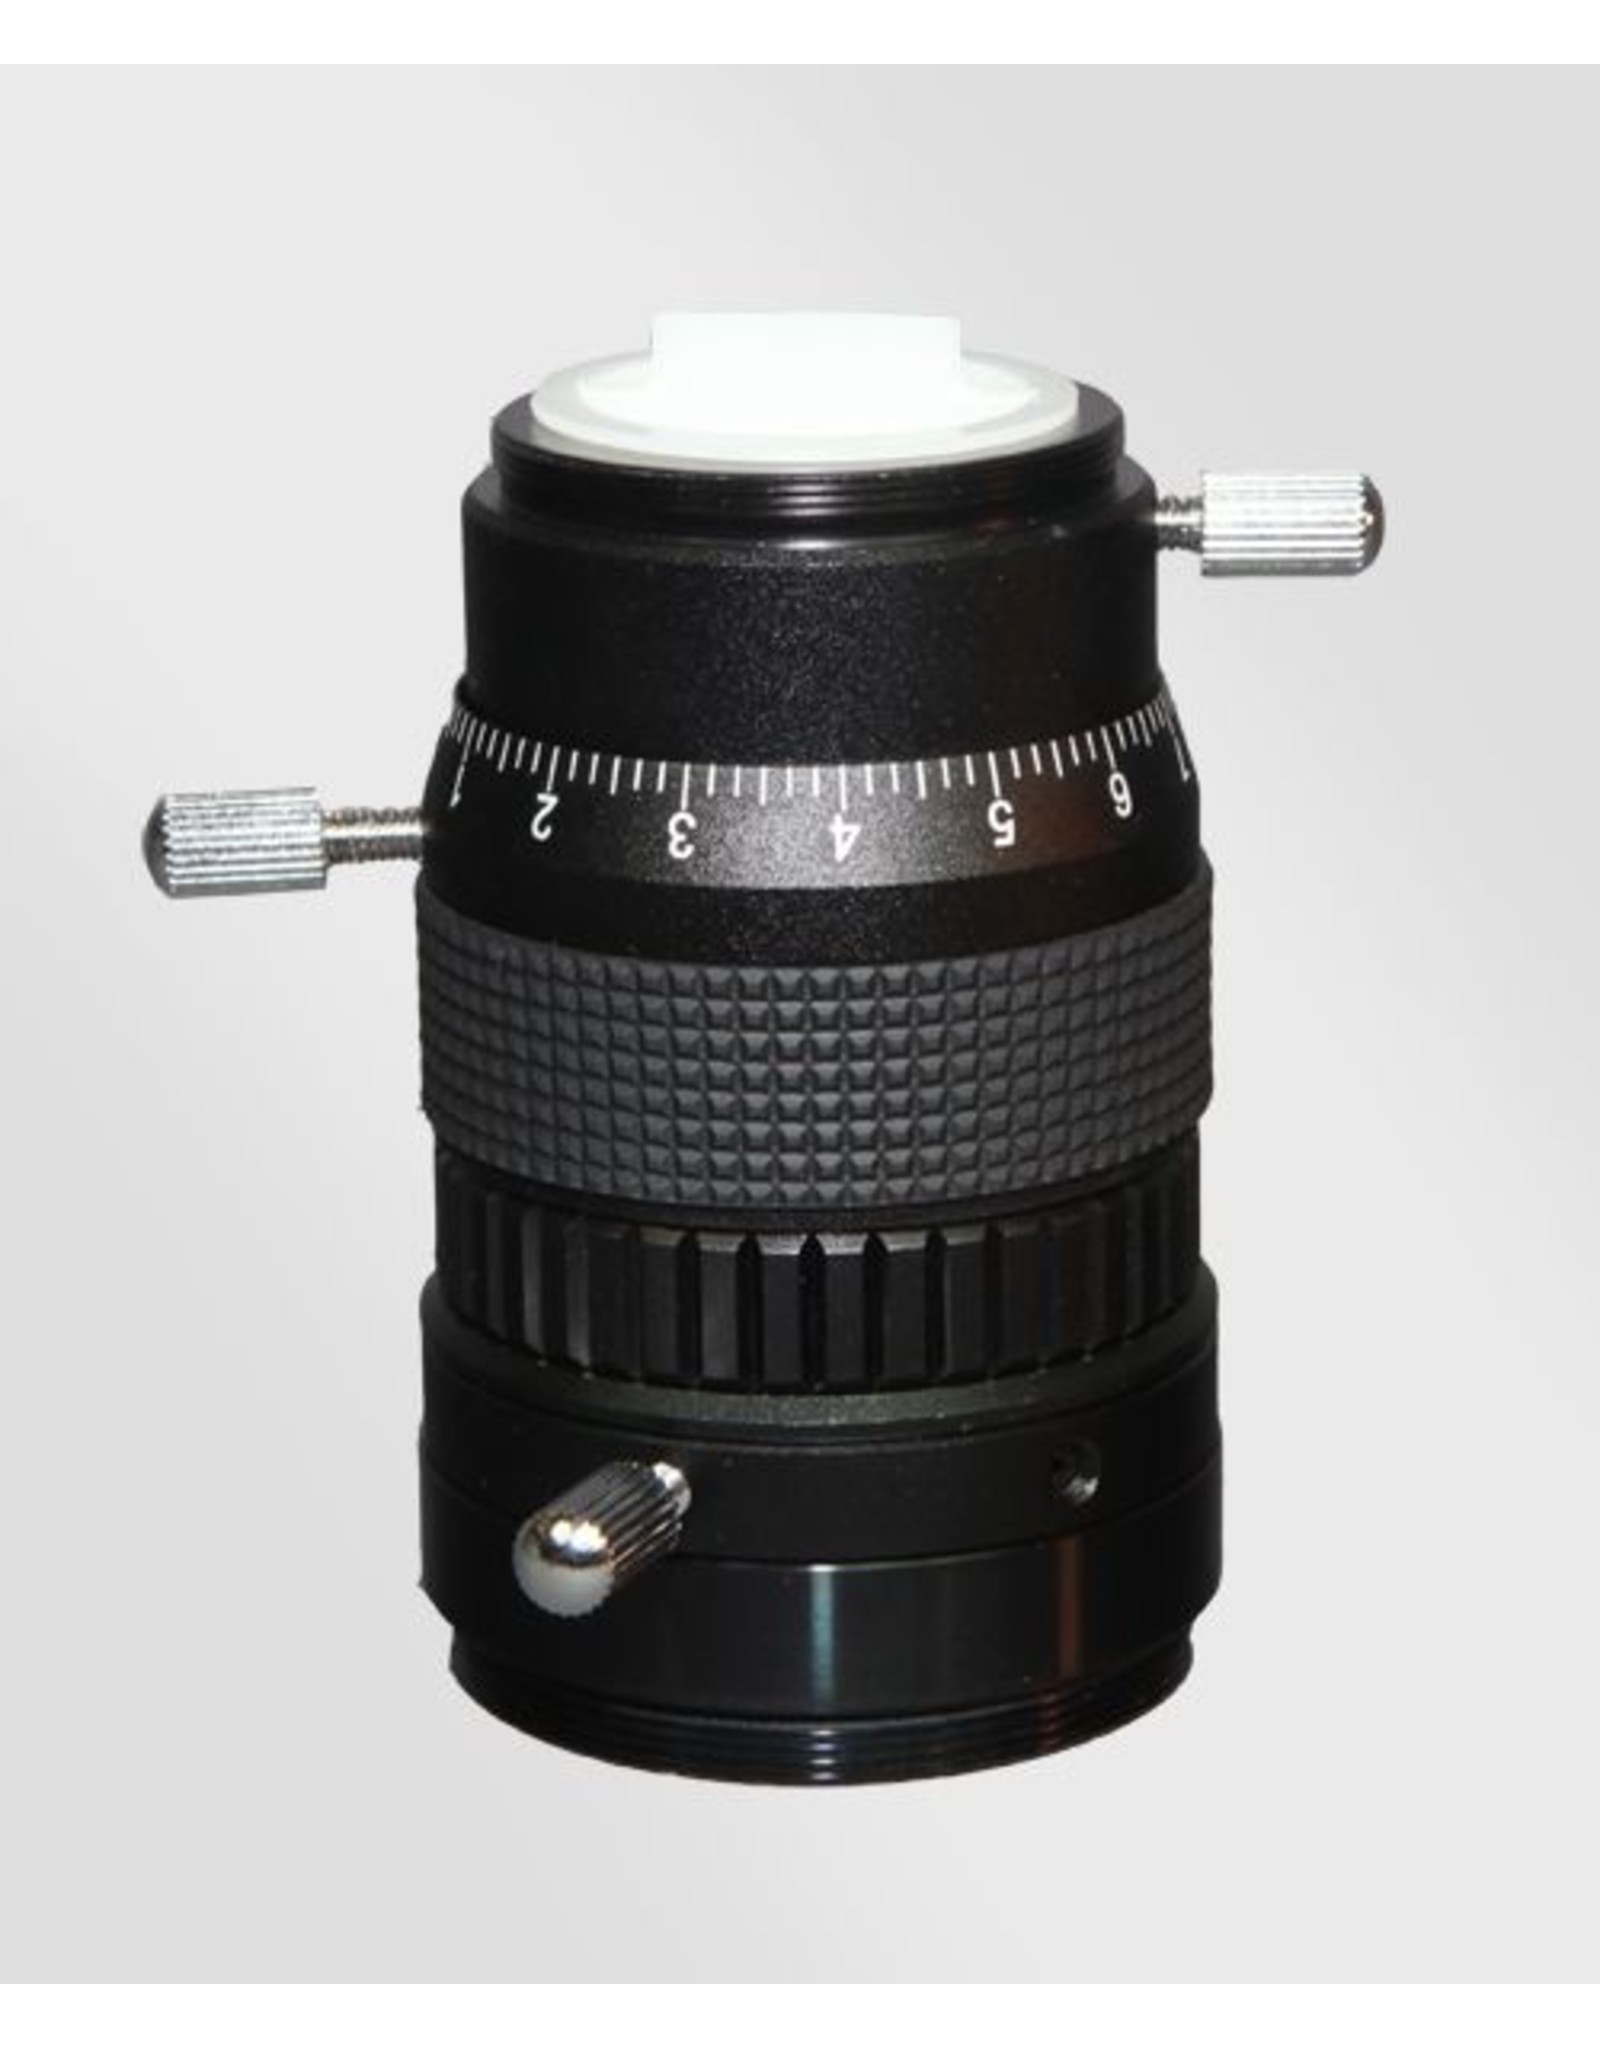 Stellarvue Stellarvue Non Rotating Helical Focuser - For 50mm Finderscopes - F050HNR